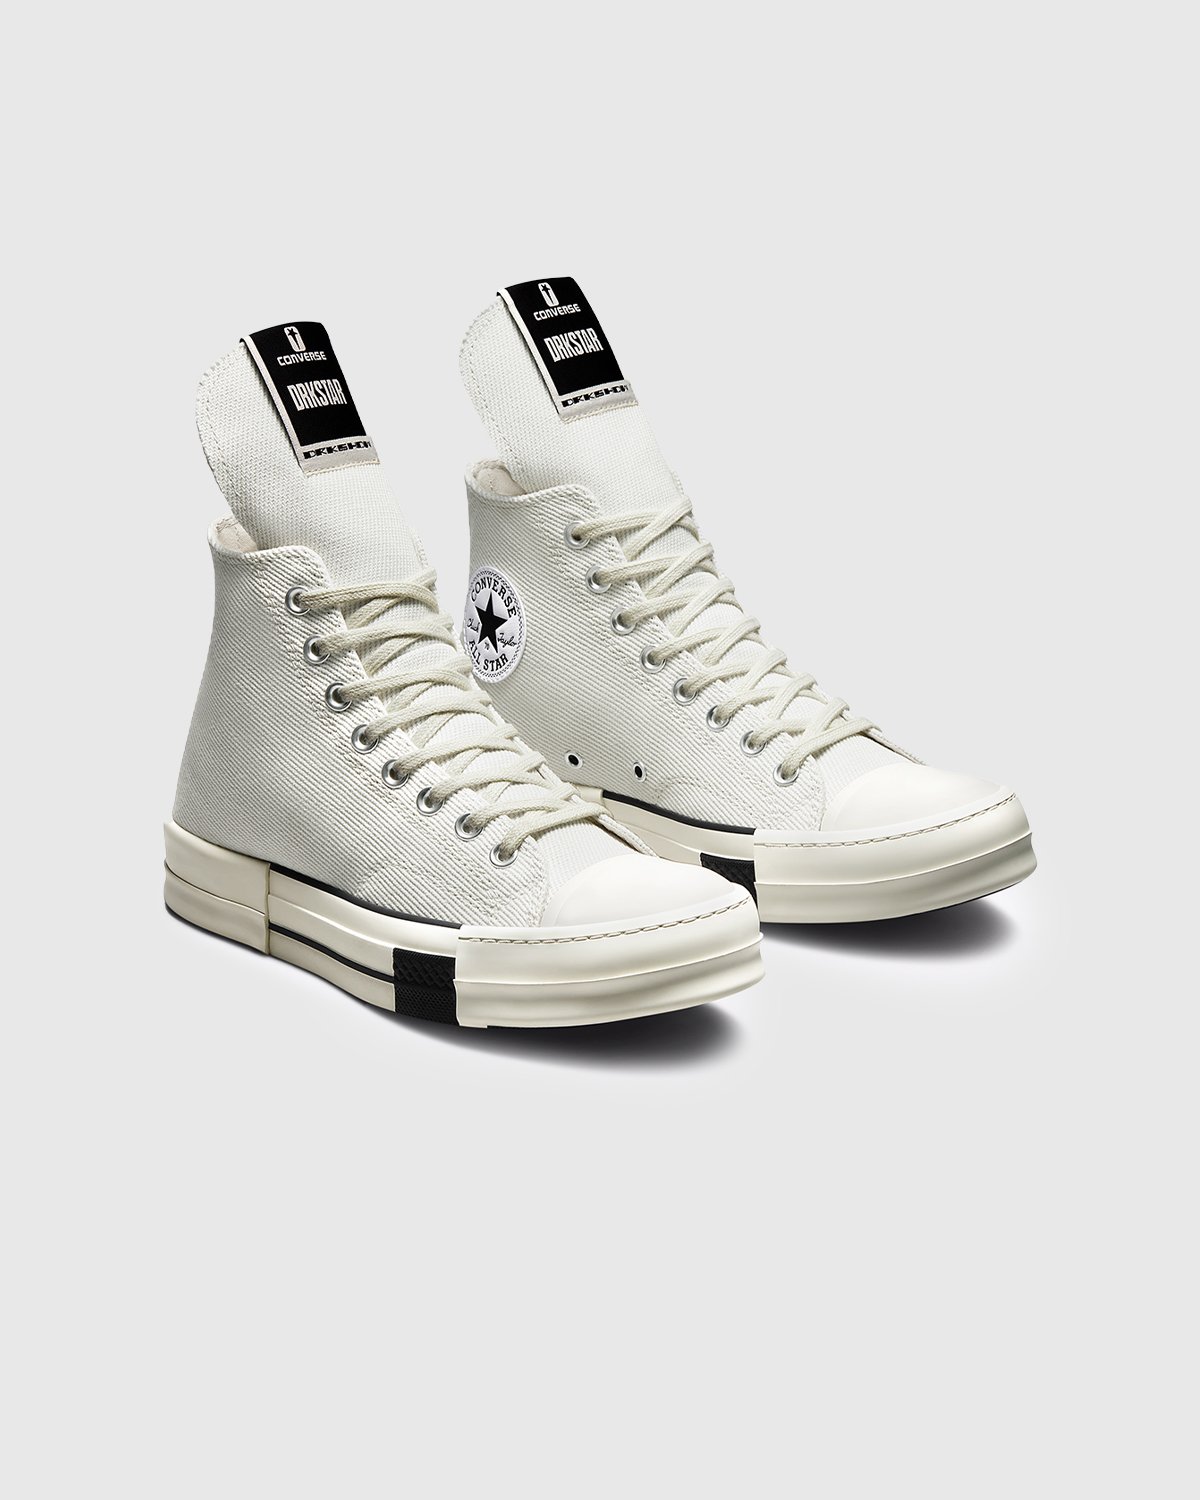 Converse x Rick Owens - DRKSTAR Chuck 70 High Lily White Egret Black - Footwear - White - Image 3